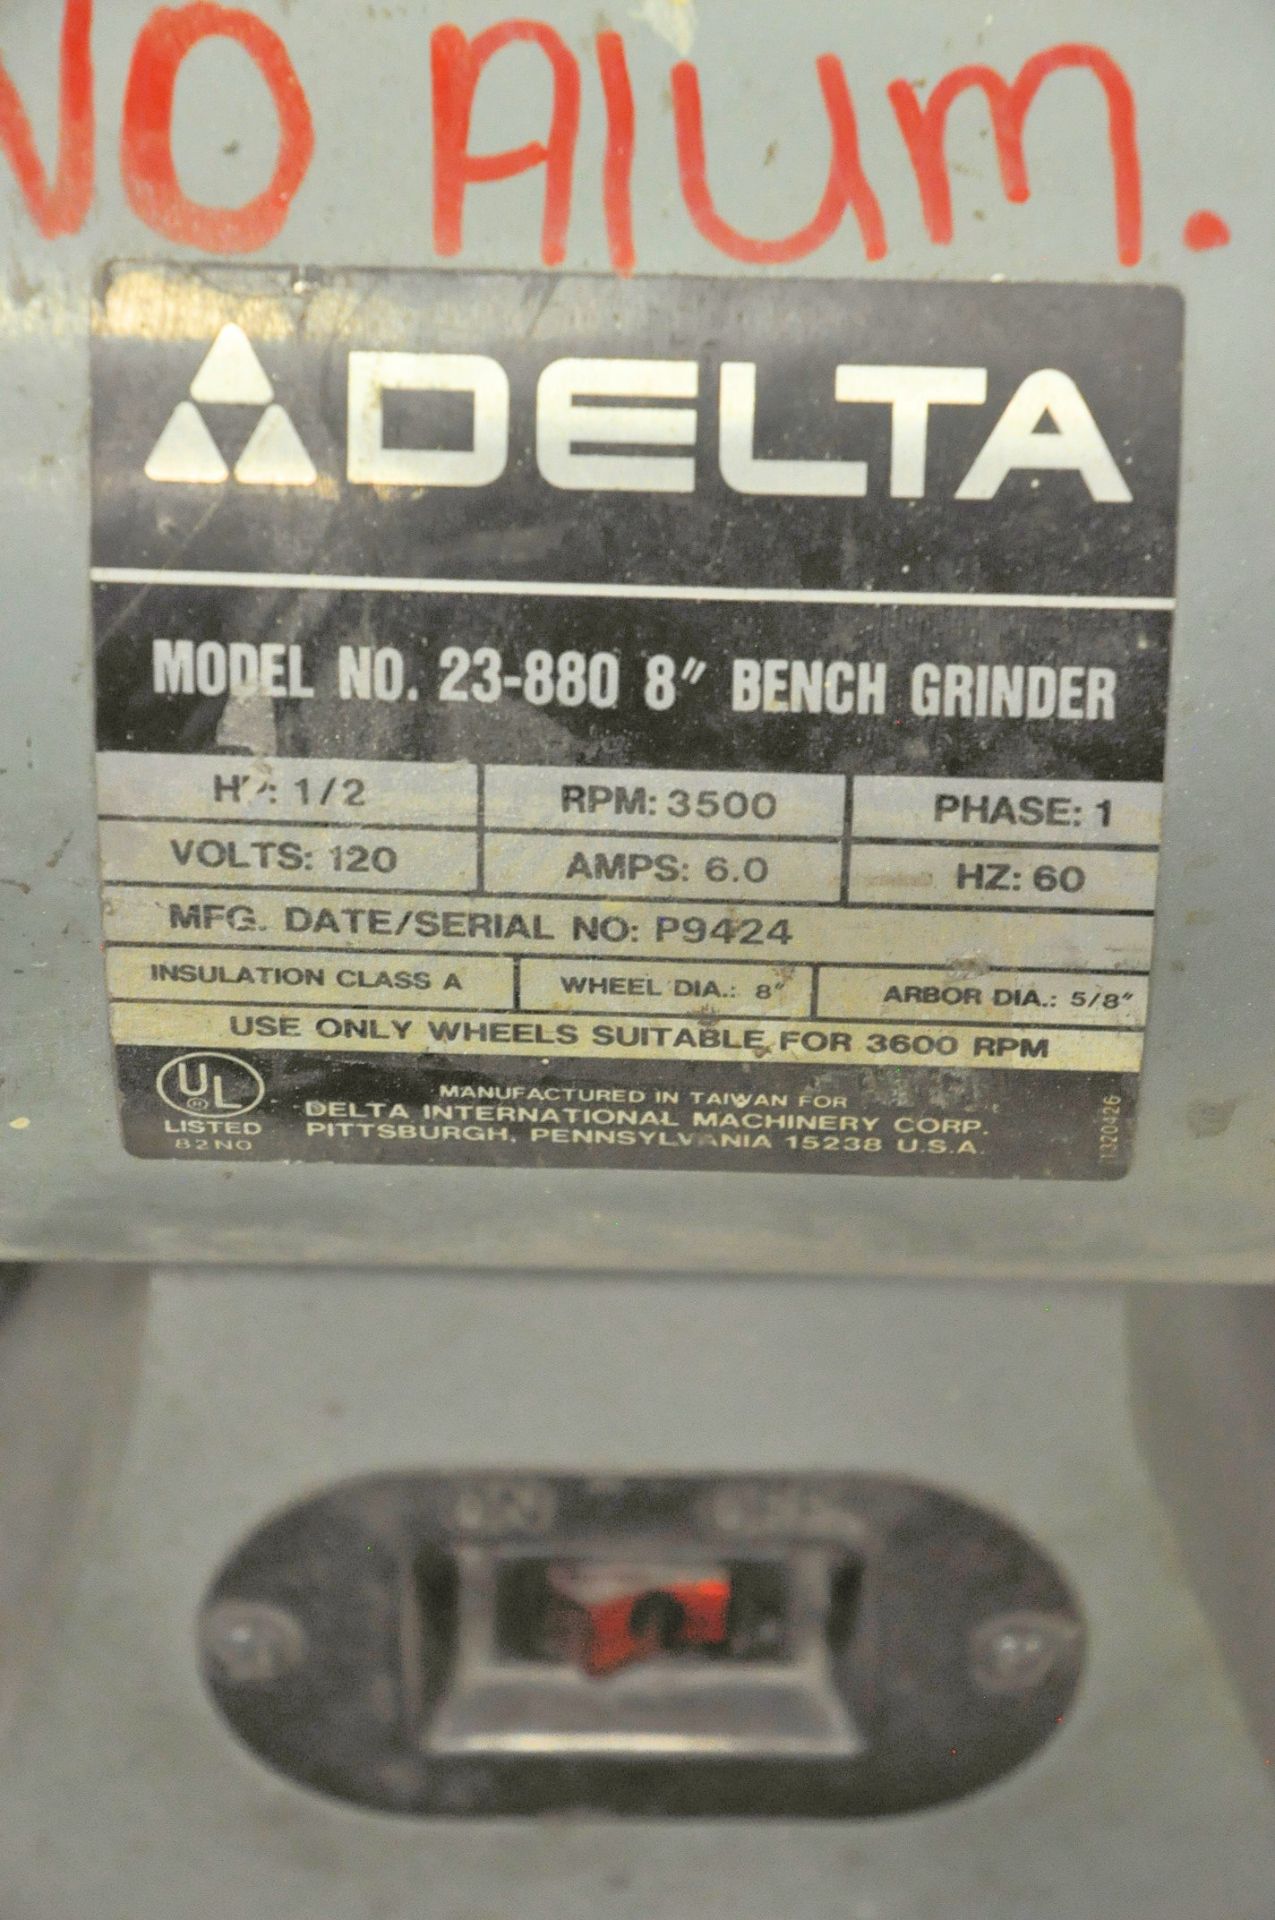 Delta Model 23-880, 8" x 1/2-HP Double End Pedestal Type Grinder, S/n P9424 - Image 2 of 2